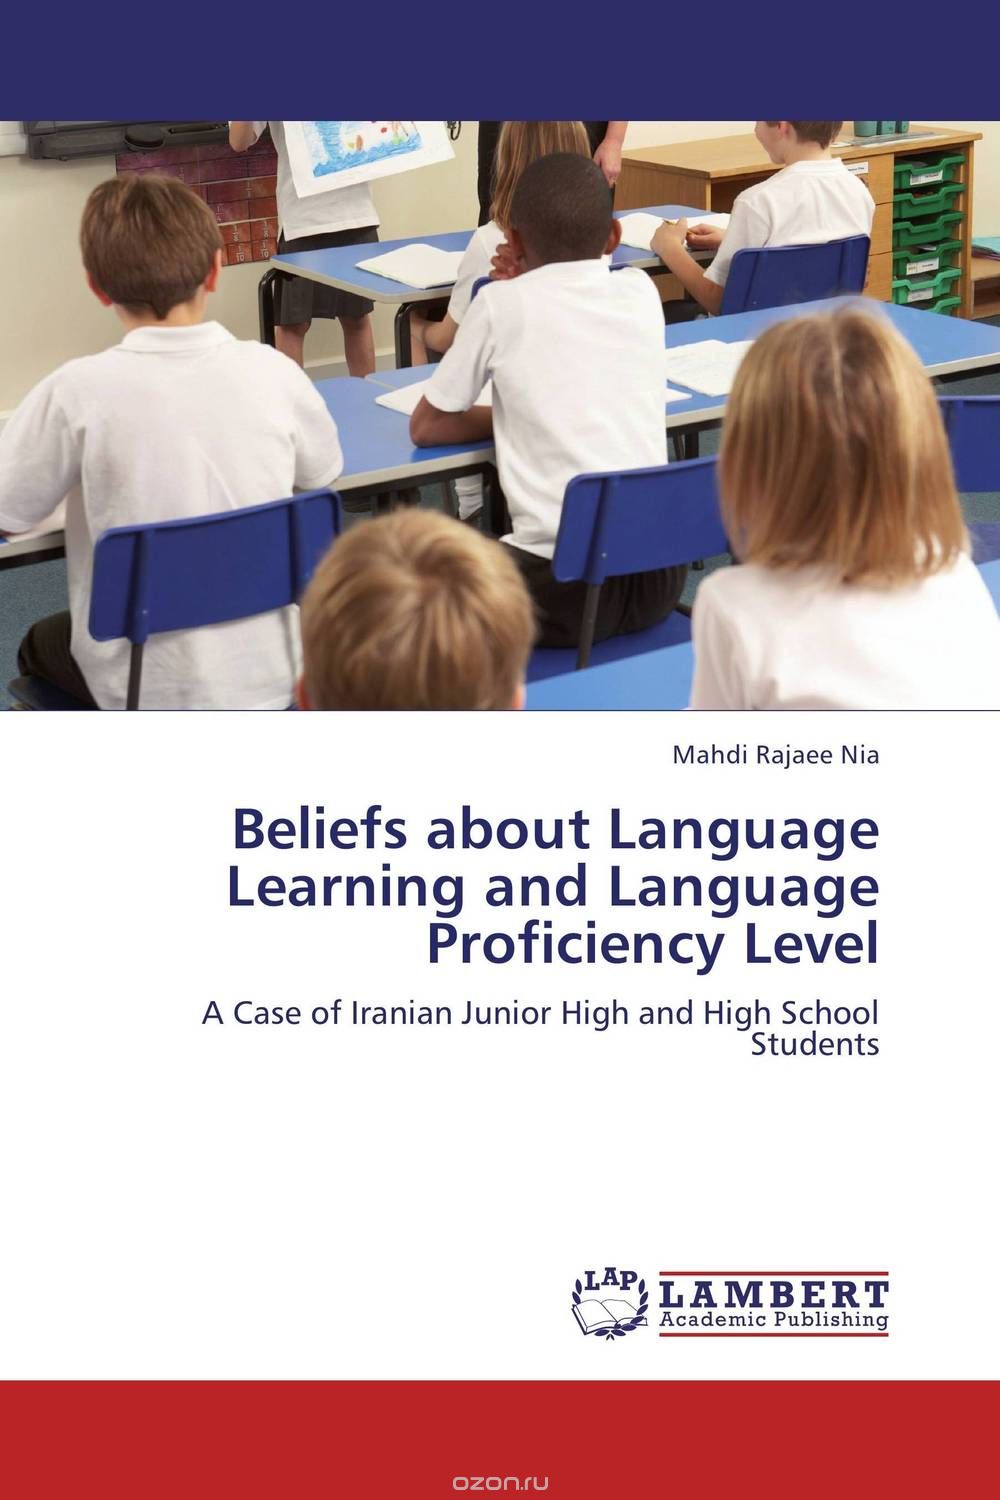 Скачать книгу "Beliefs about Language Learning and Language Proficiency Level"